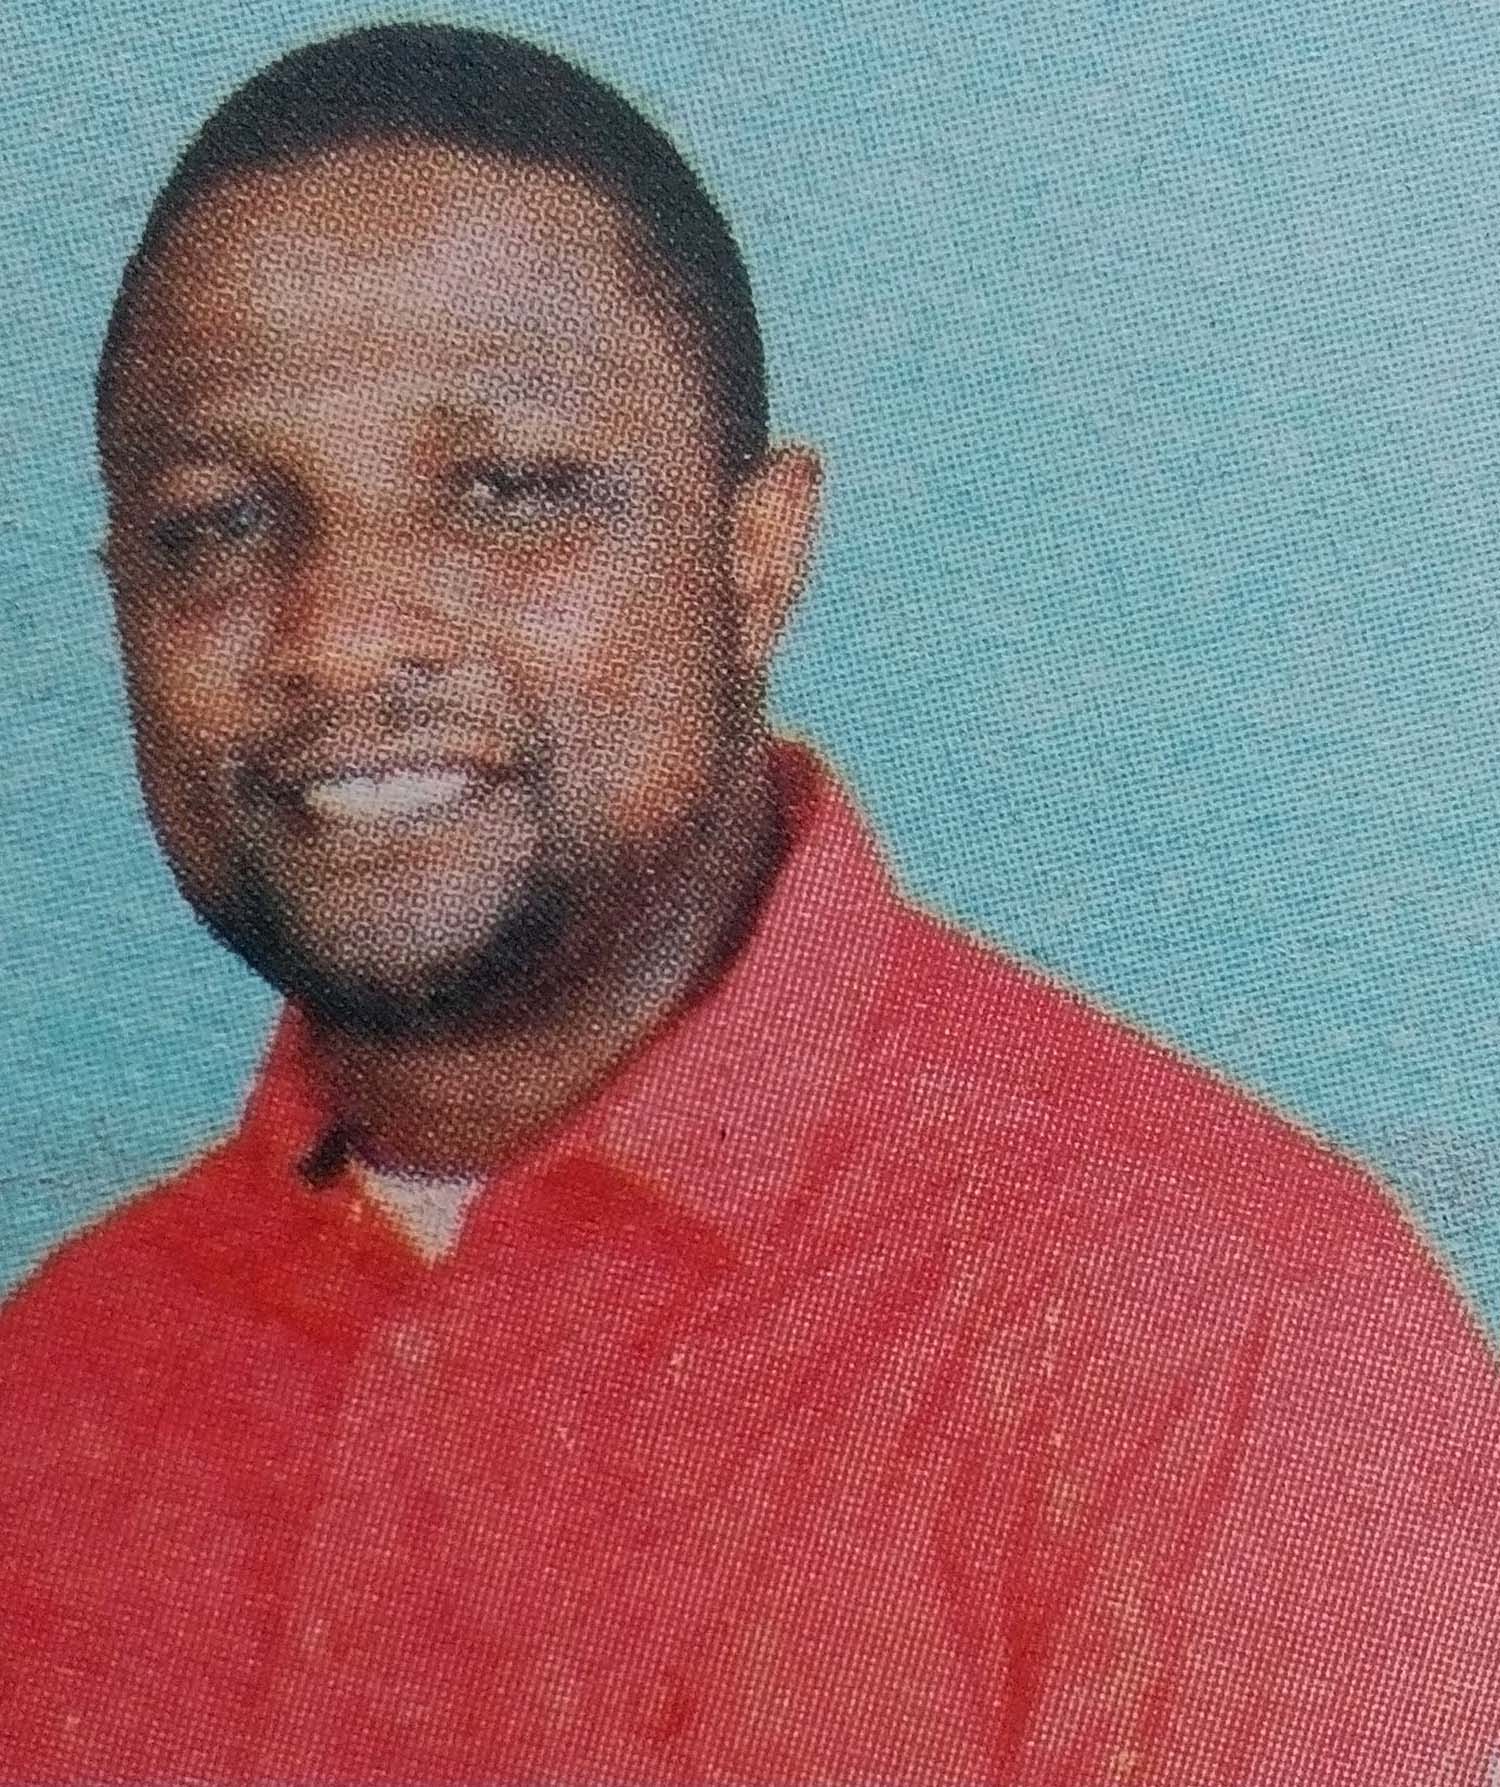 Obituary Image of NicholasWaiganjo Githaiga (NICO)